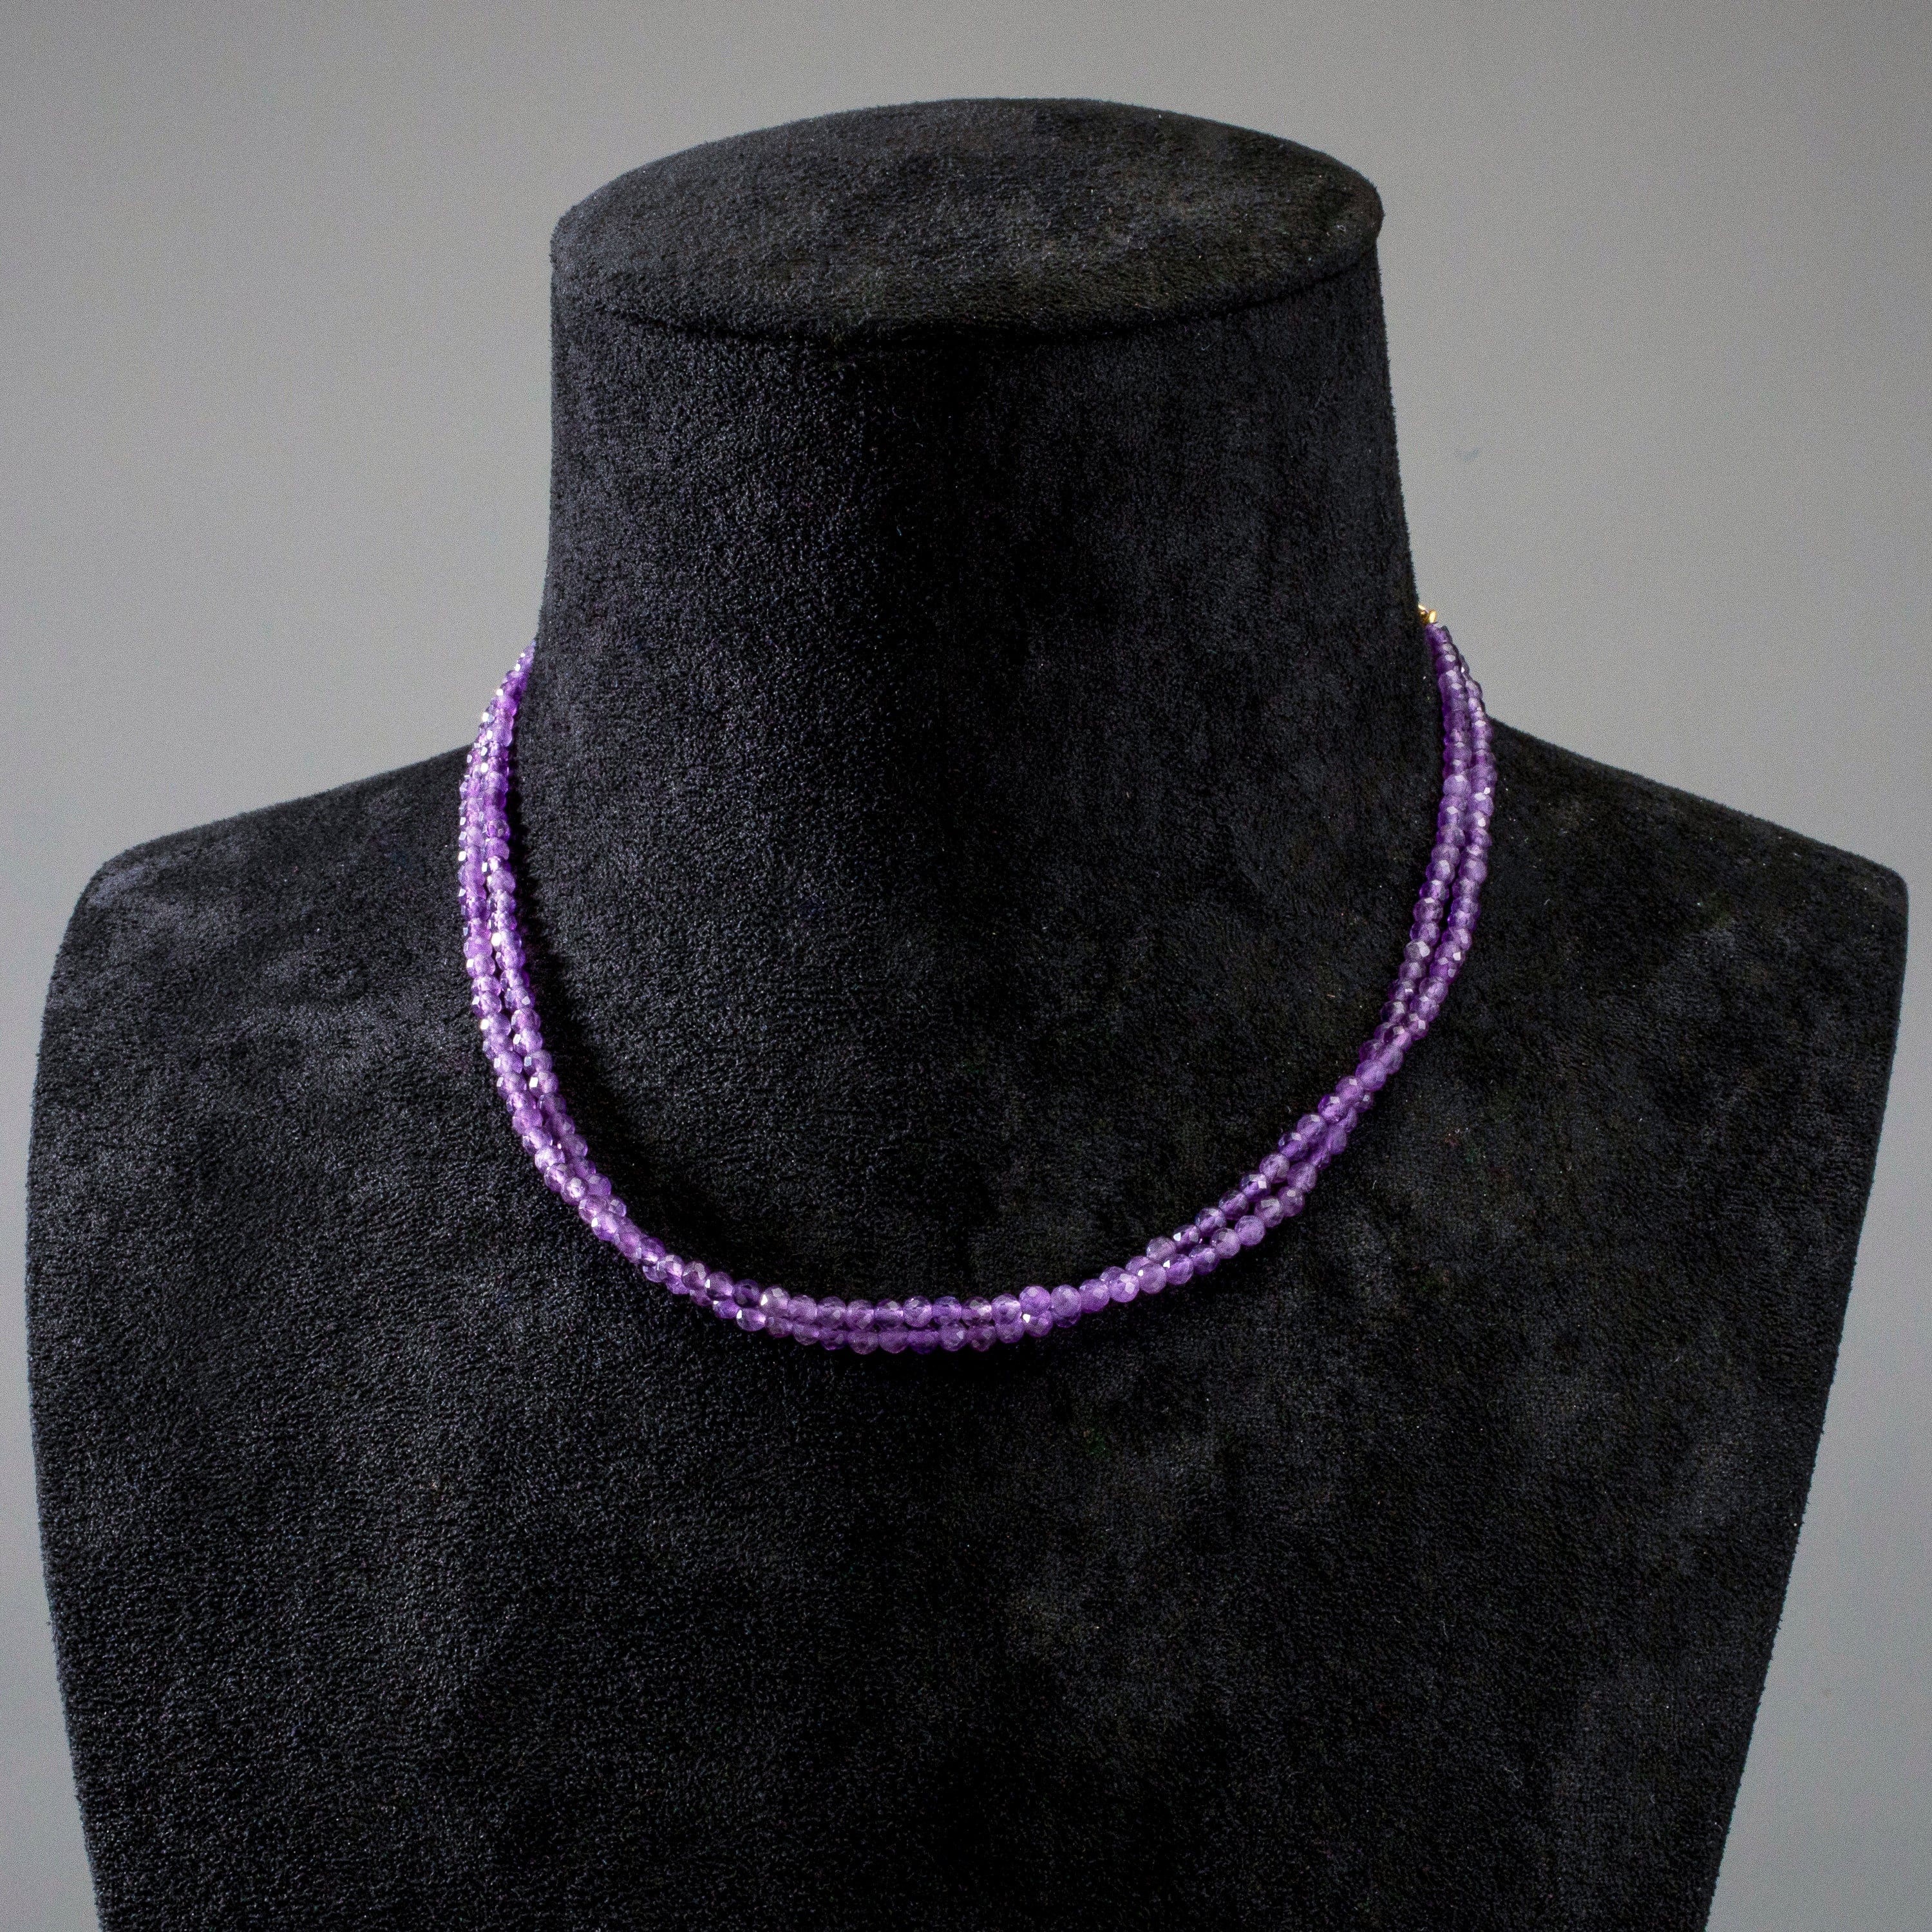 KALIFANO Gemstone Jewelry 3mm Amethyst Faceted 31" Necklace / Multi Wrap Bracelet N3-79G-AM